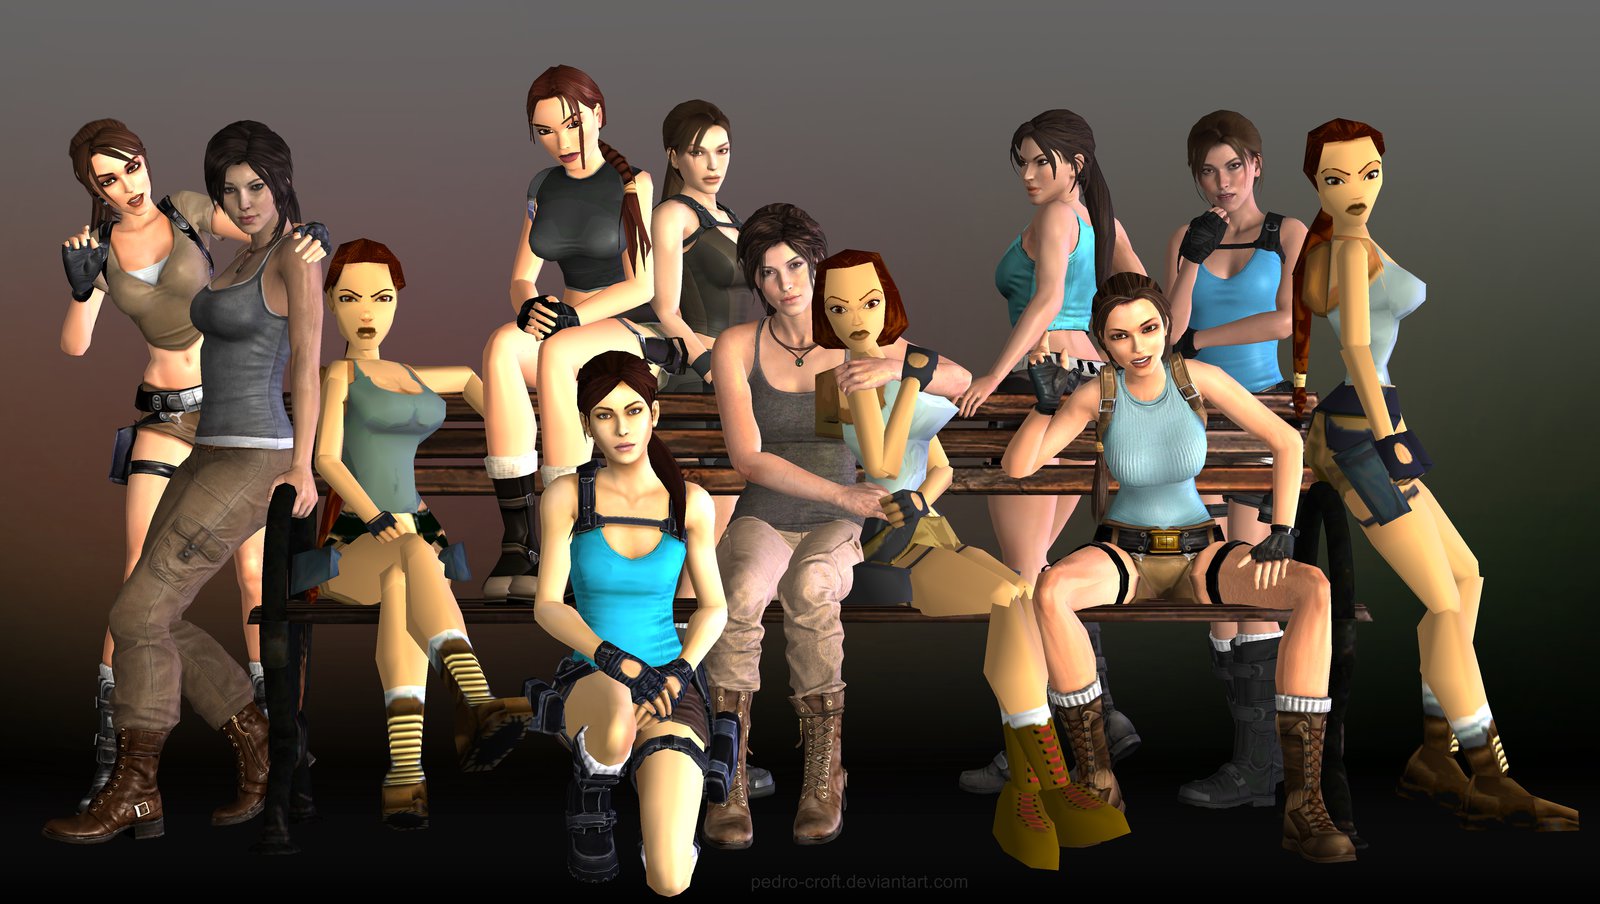 Lara Croft Background